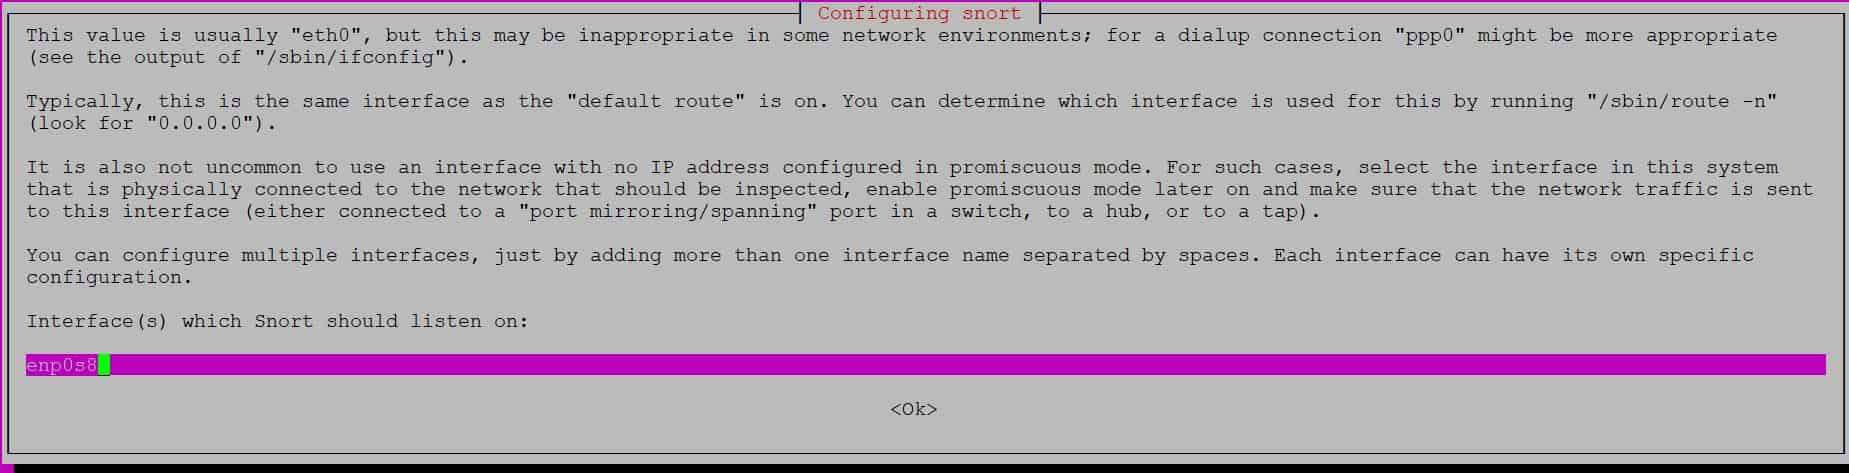 How to Install Snort on Ubuntu 20.04 LTS (Focal Fossa) 2